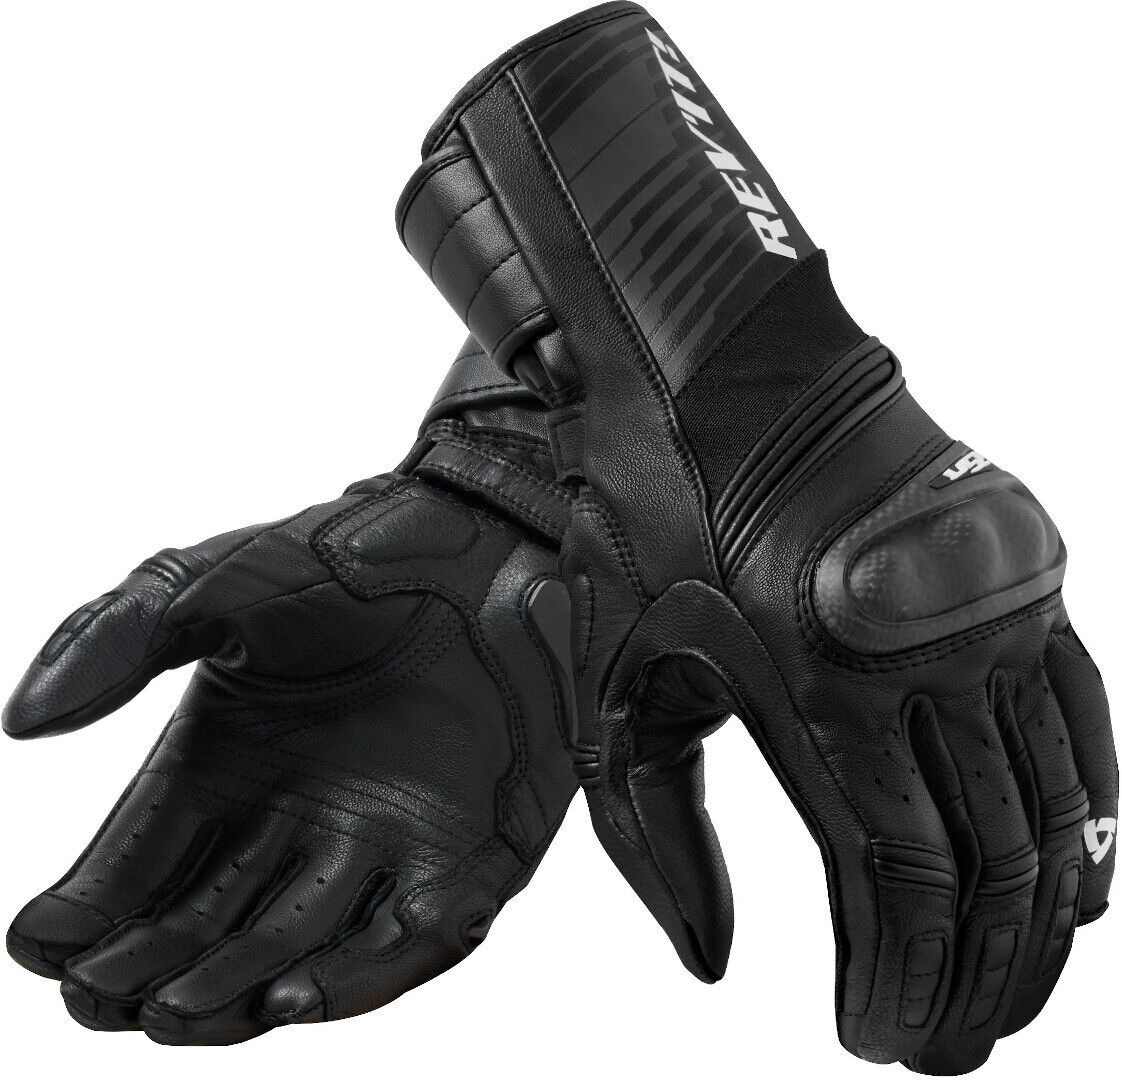 Revit RSR 4 Motorrad Handschuhe XL Schwarz Grau